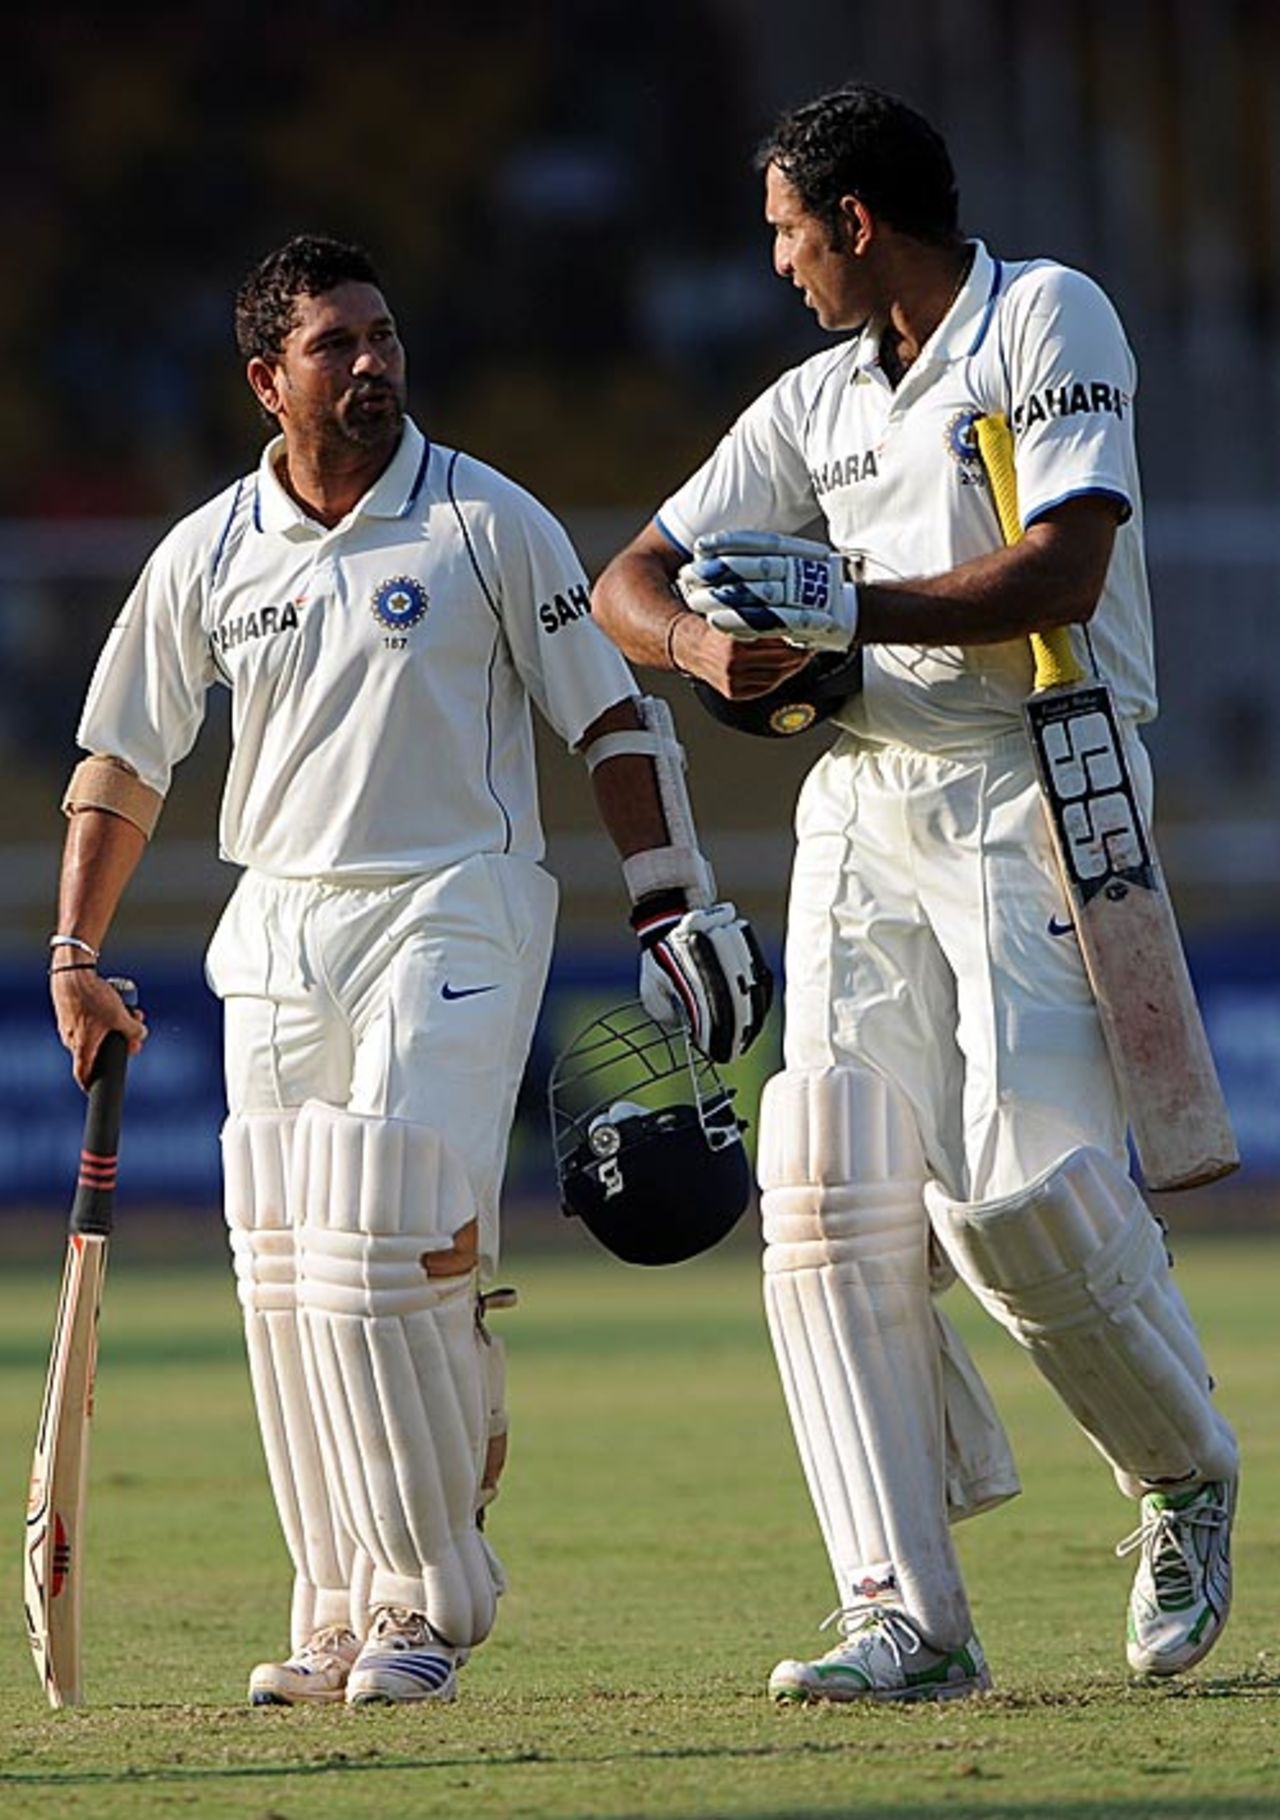 Sachin Tendulkar and VVS Laxman stroll back after saving the Test, India v Sri Lanka, 1st Test, Ahmedabad, 5th day, November 20, 2009 